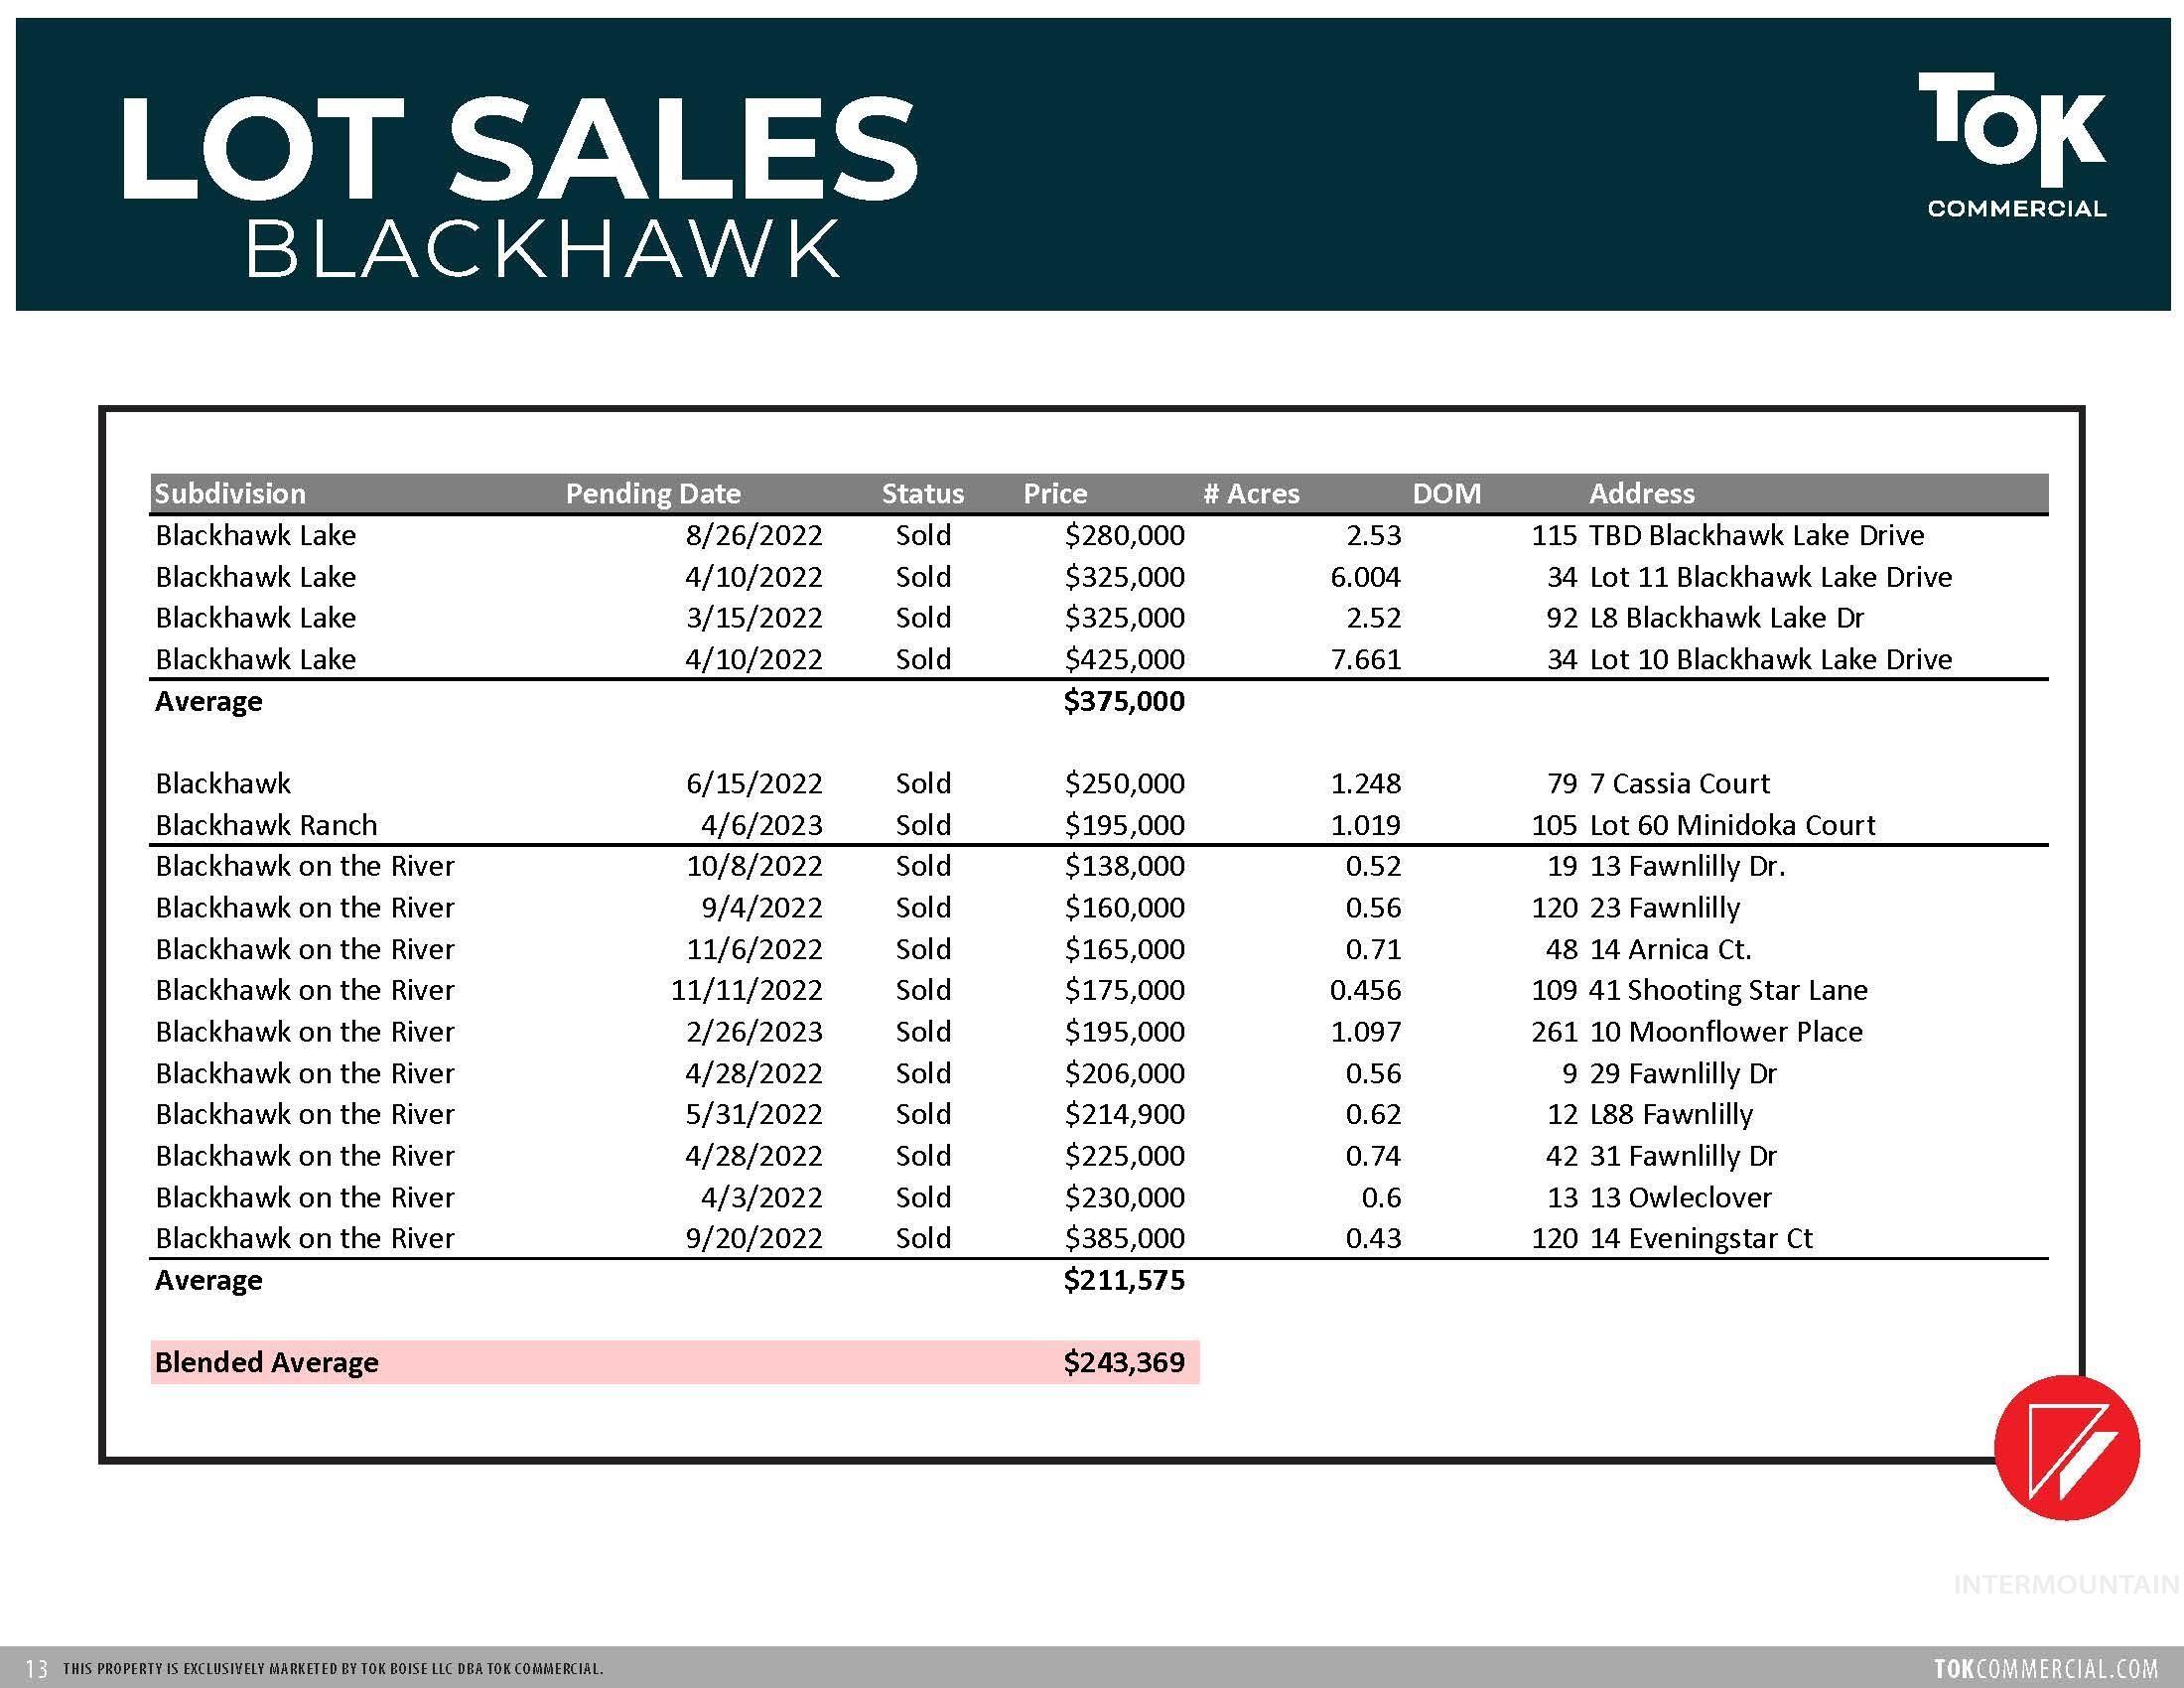 Redridge & Blackhawk Land, McCall, Idaho 83638, Land For Sale, Price $20,900,000,MLS 98905742